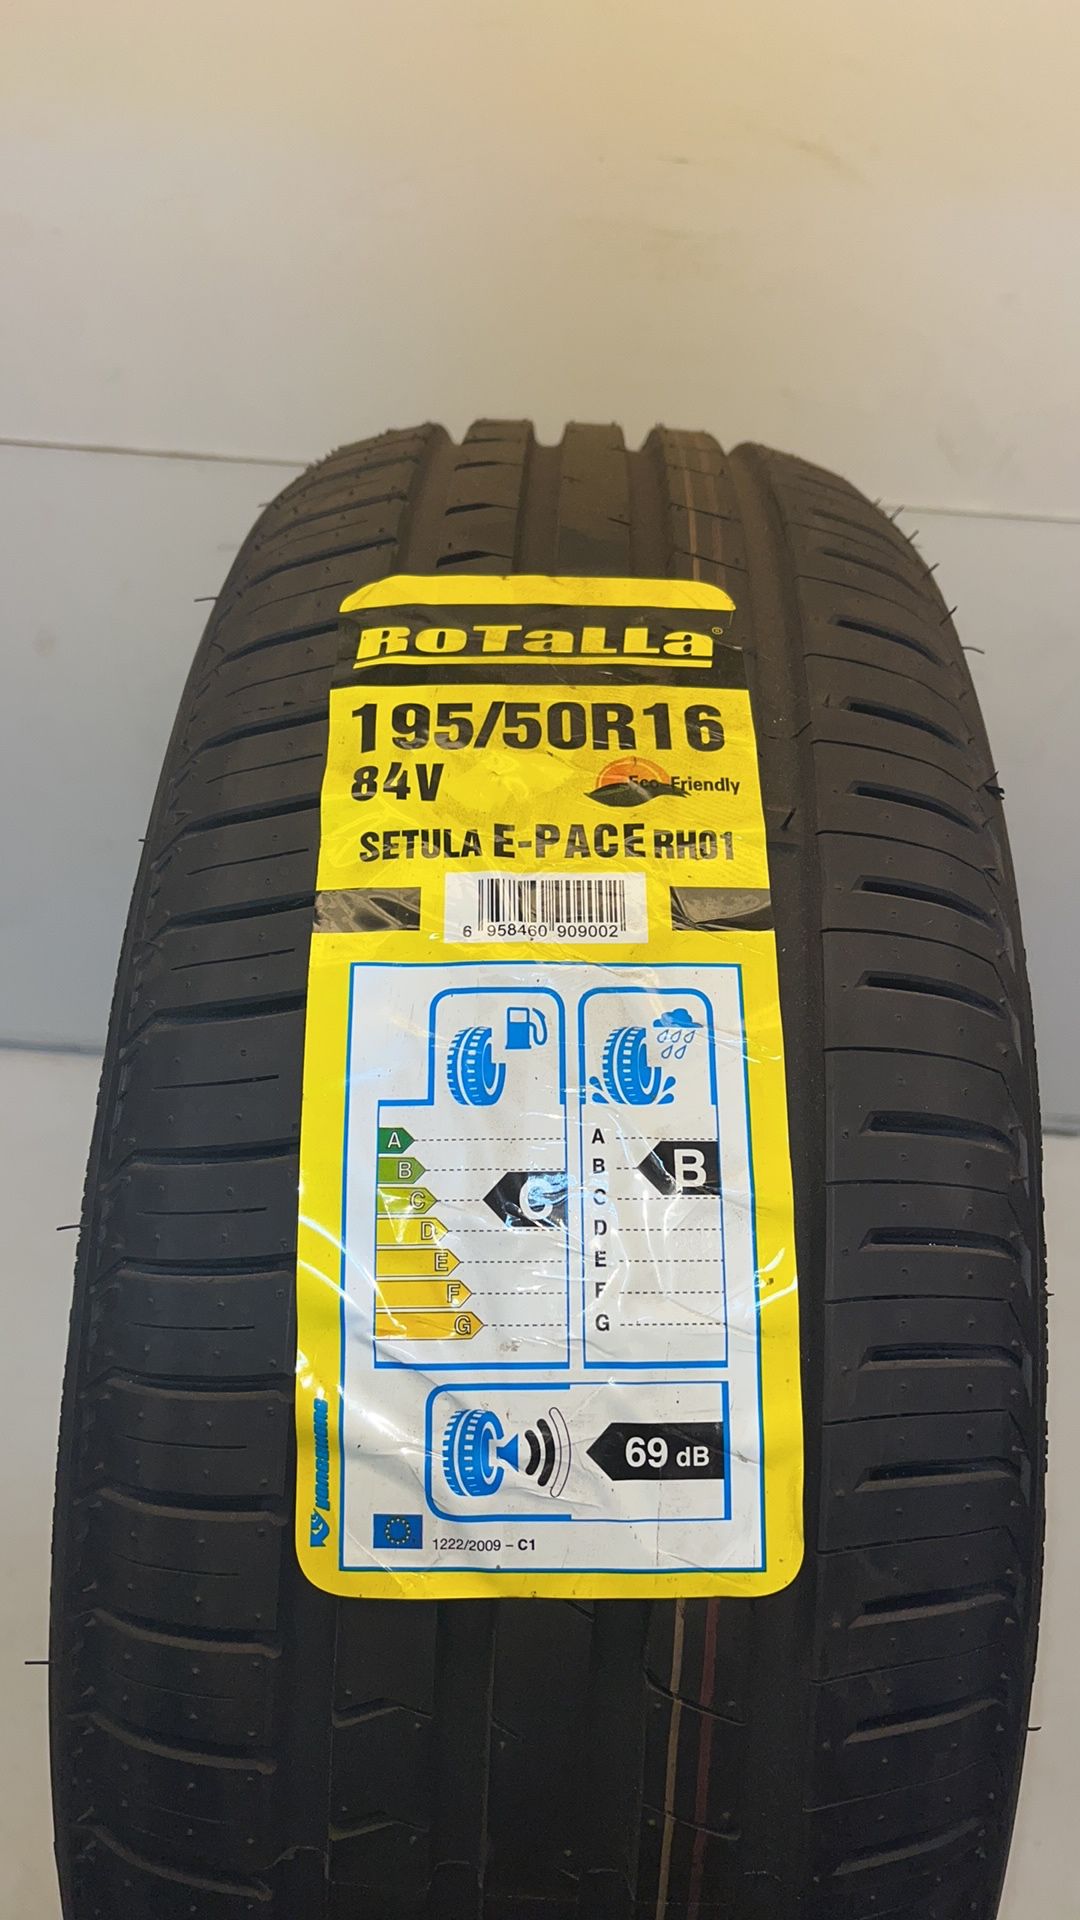 Rotaua | Setula E-Pace RH01 | 195/50R16 Tyre